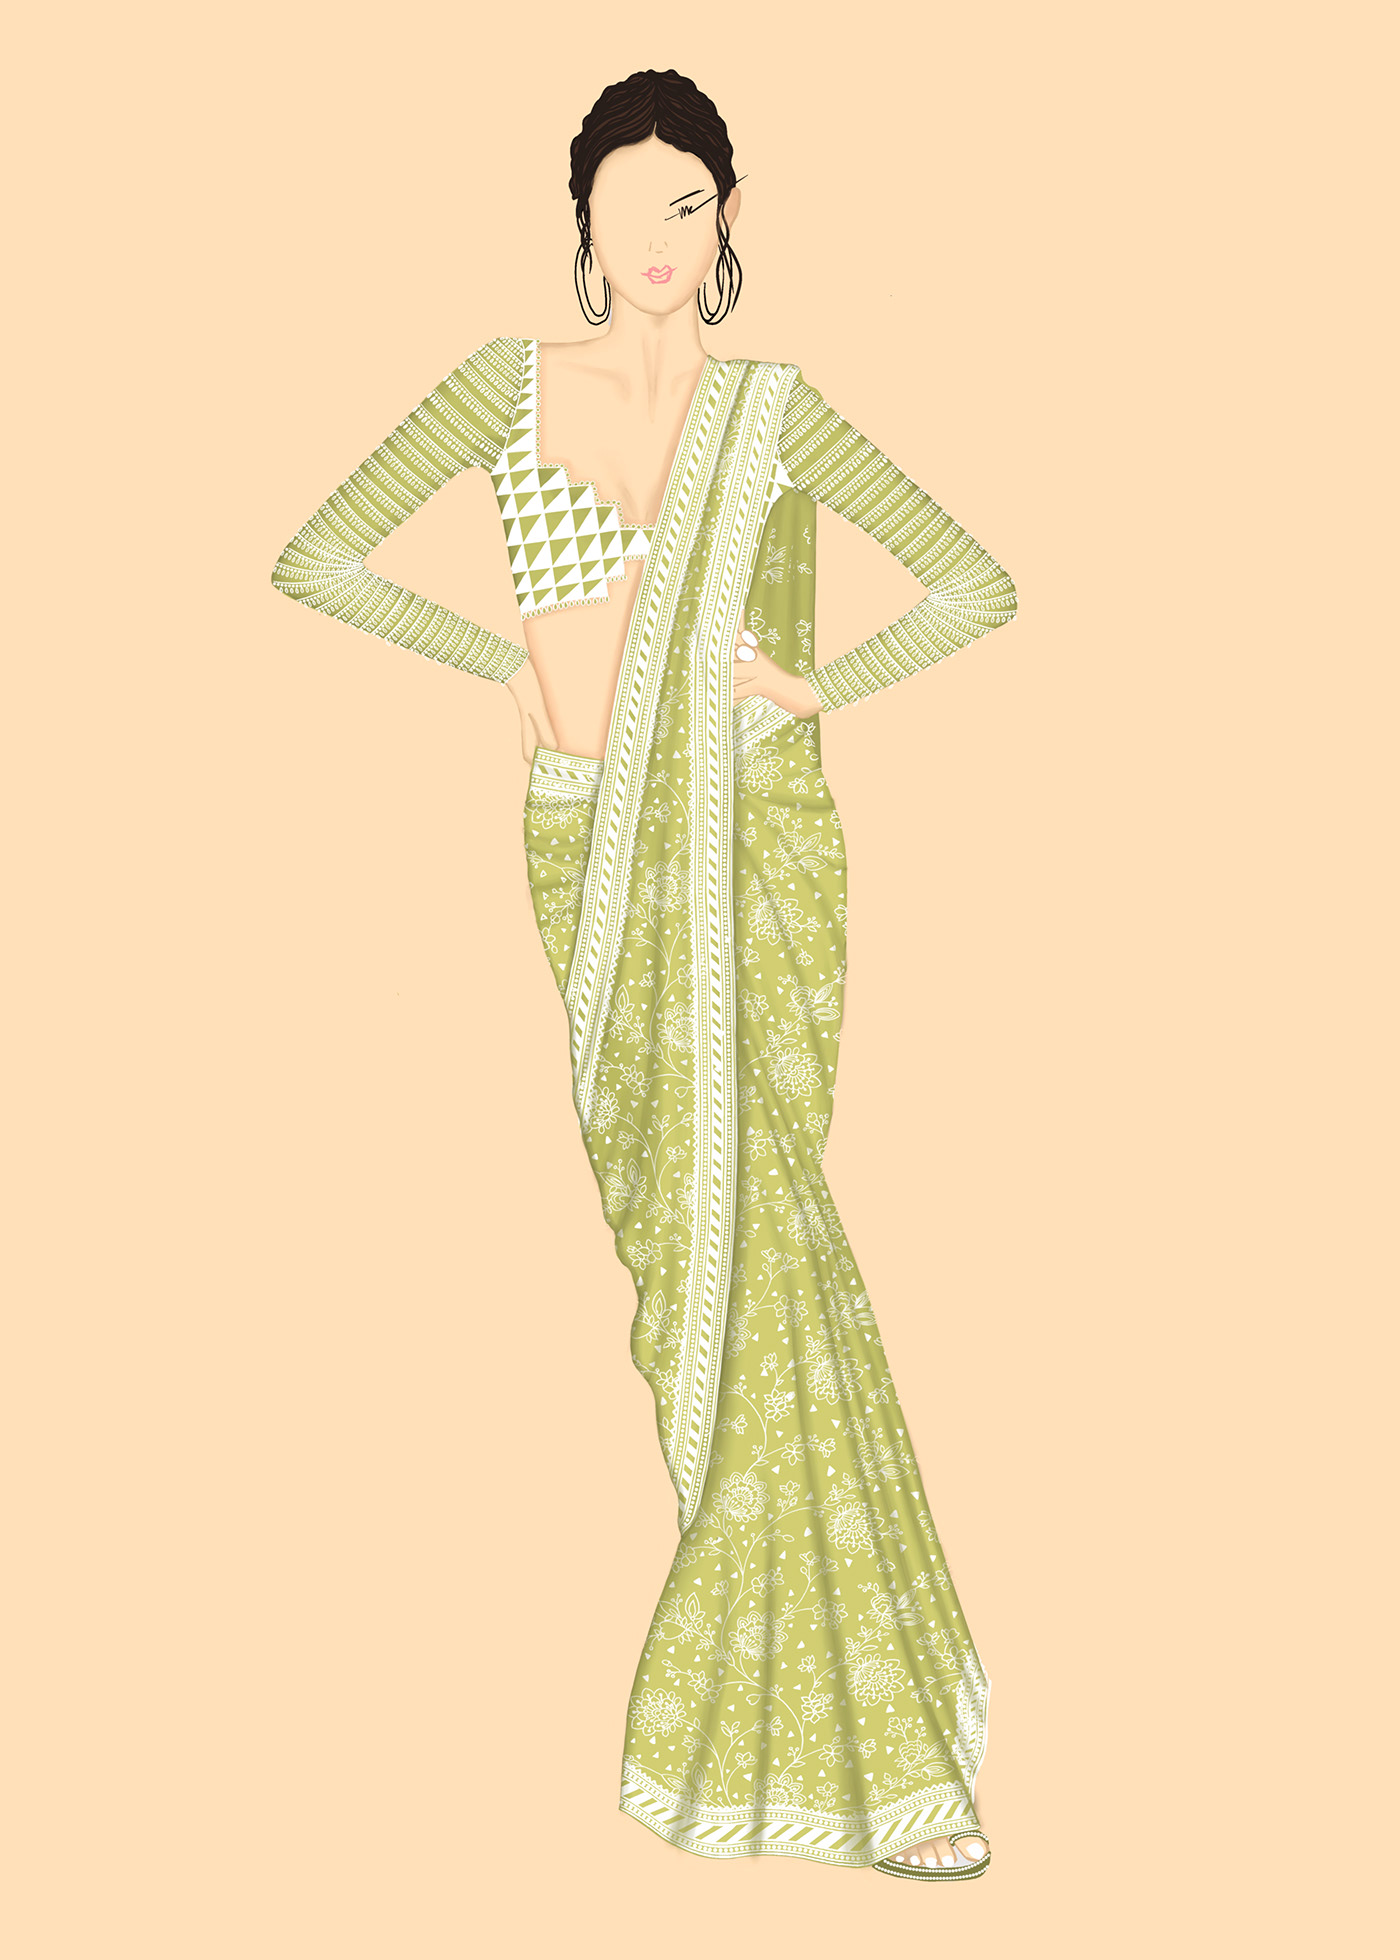 saree design blouse Embroidery handwork art ILLUSTRATION  outfit Ethnic surface design procreate sketch